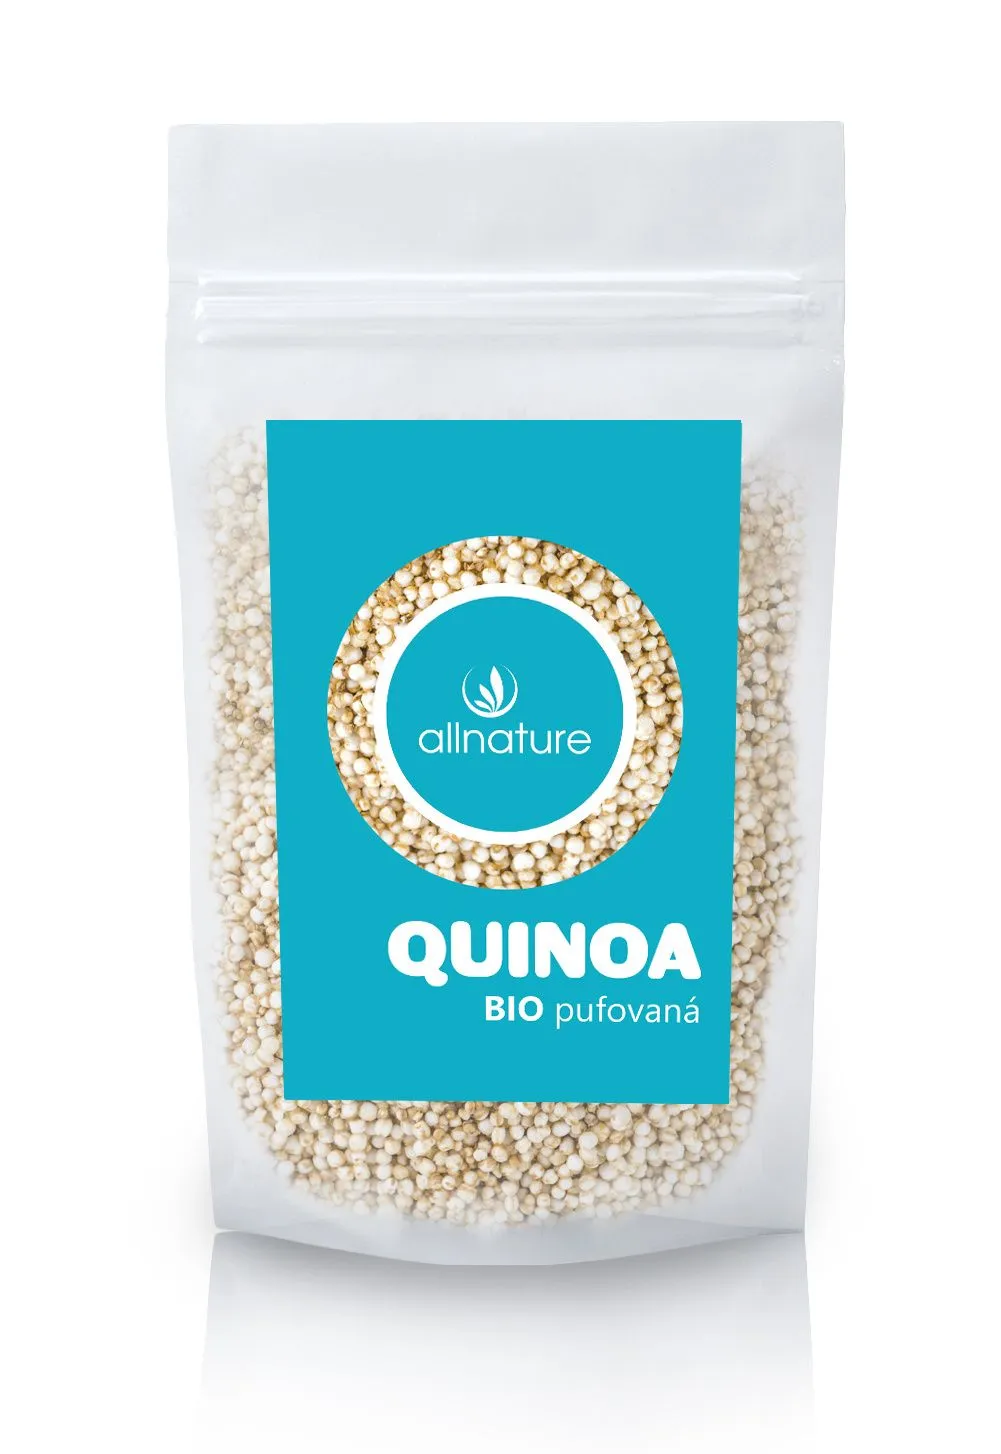 Allnature Quinoa bílá pufovaná BIO 100g